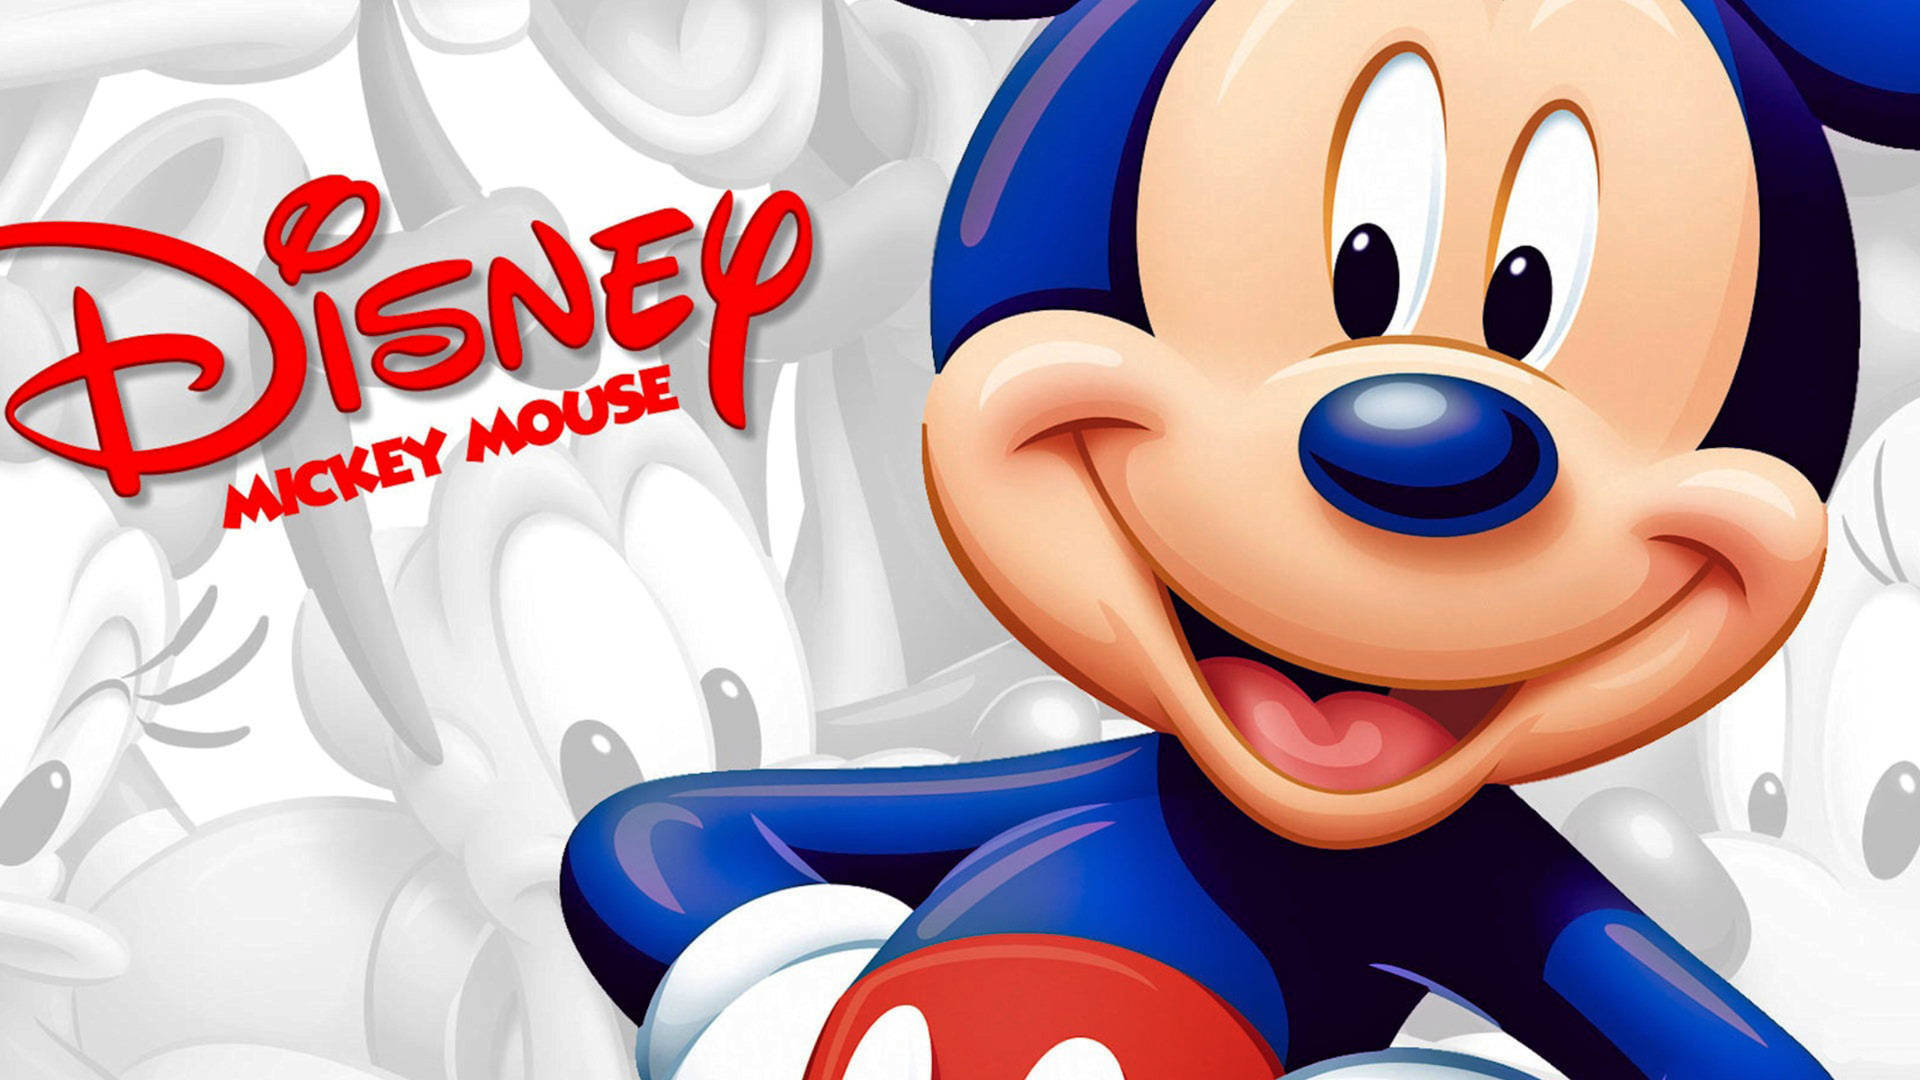 2560x1440 Disney Mickey Mouse Mascot